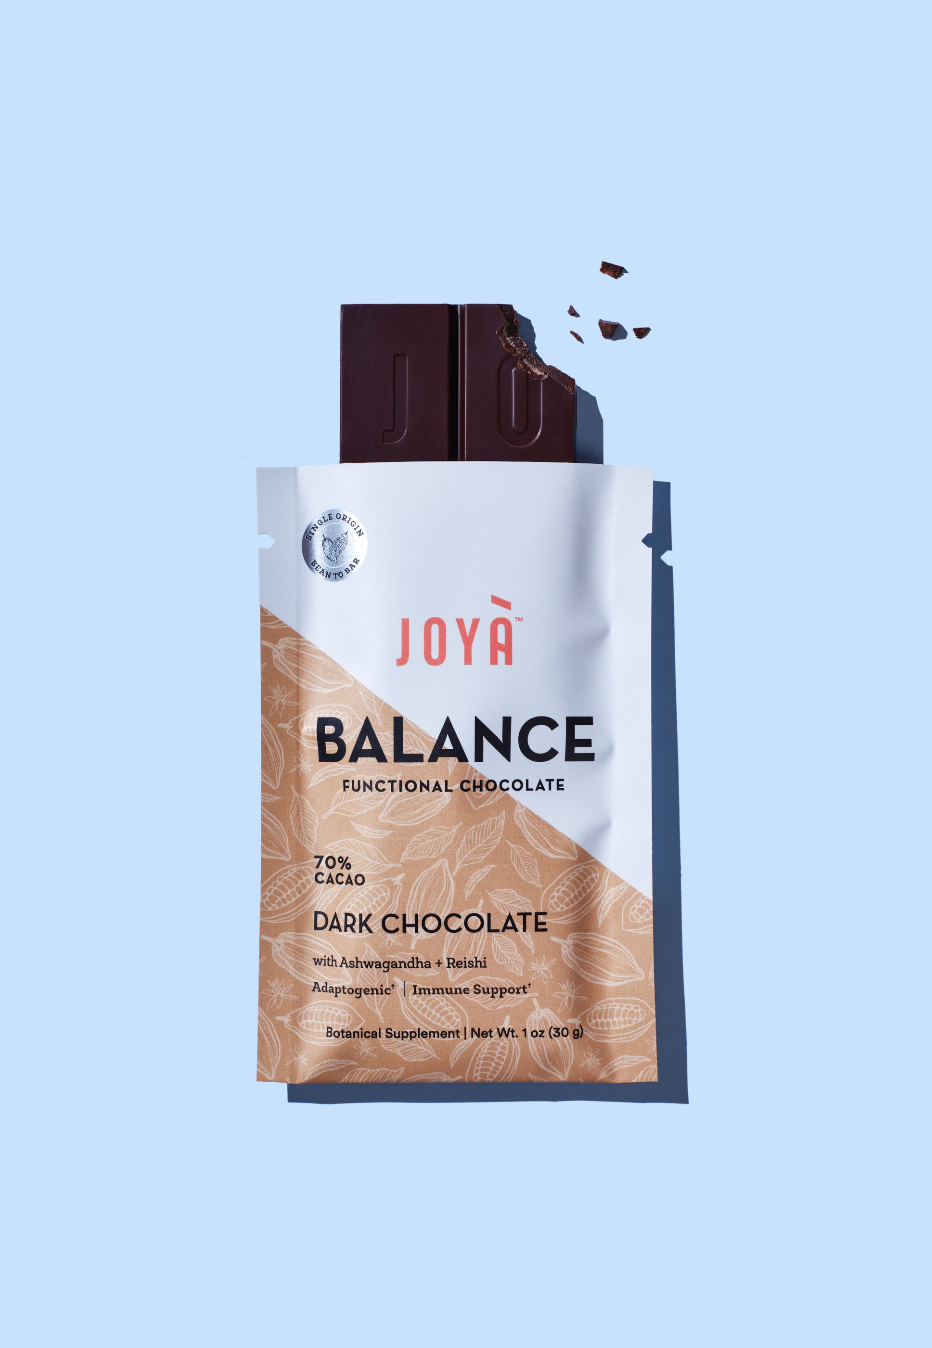 JOYÀ's Balance Functional Chocolate